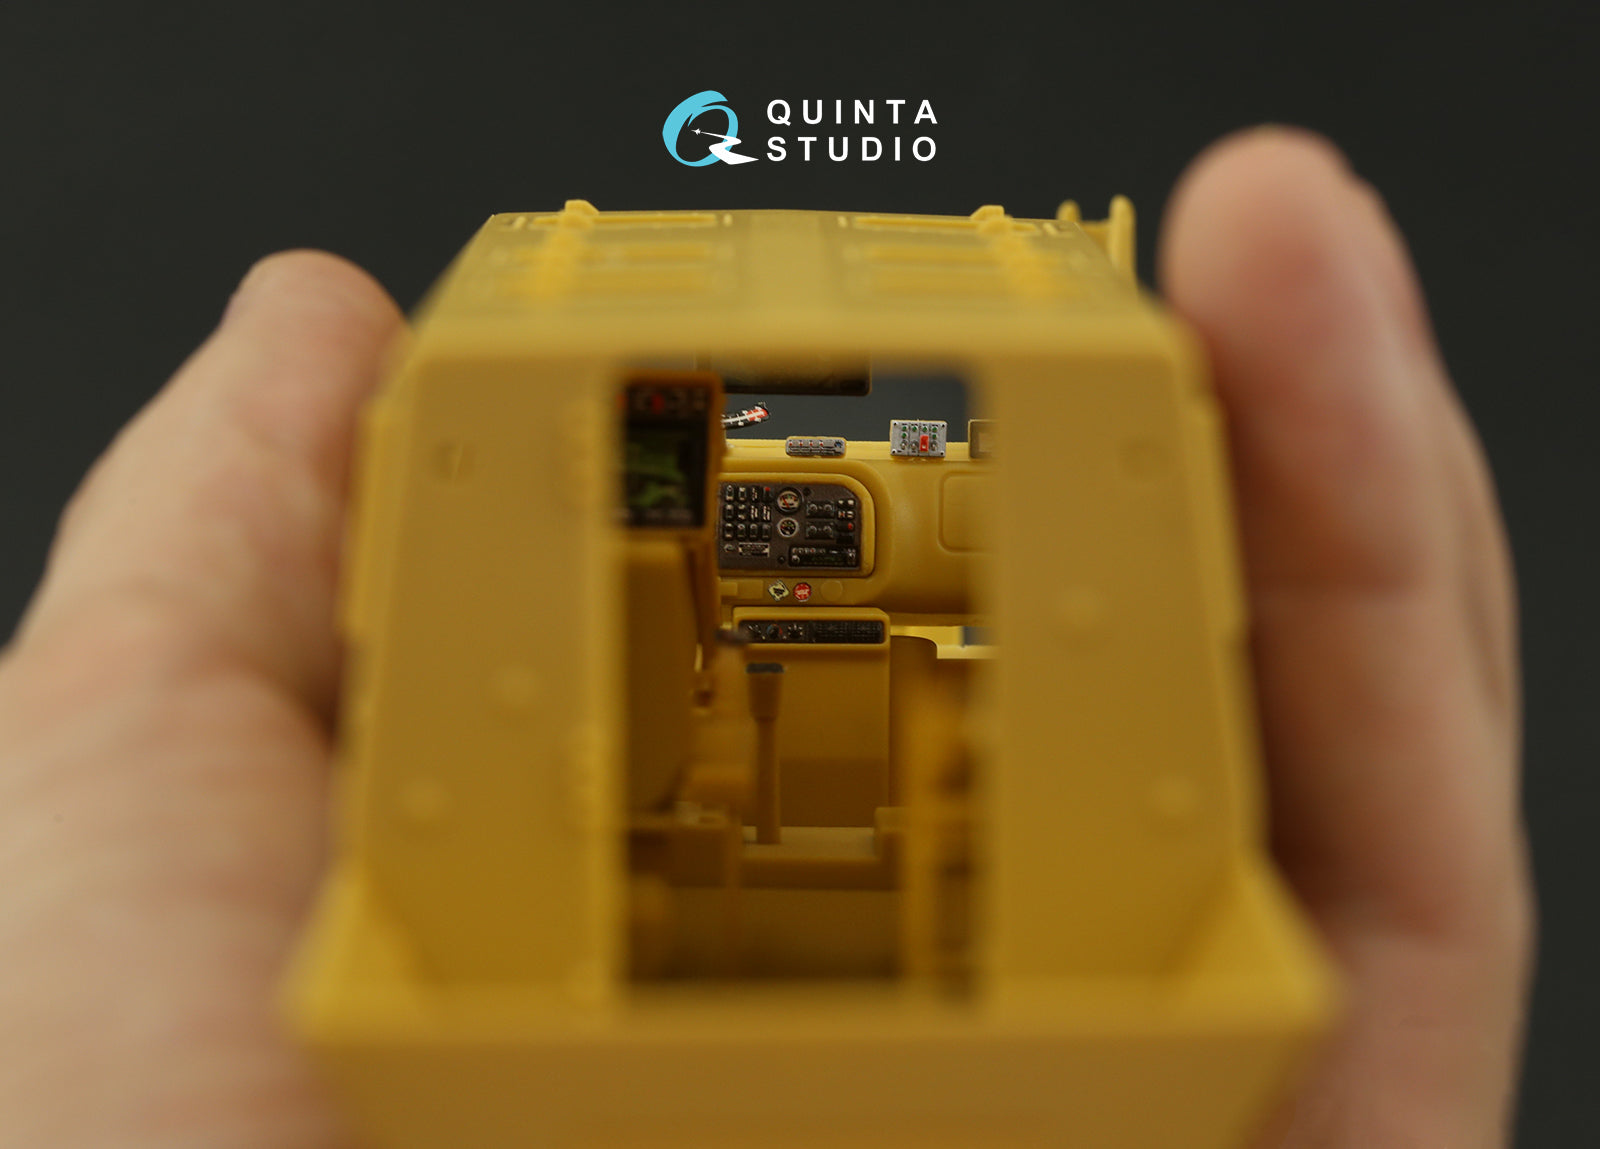 Quinta Studio - 1/35 Buffalo 6x6 MPCV QD35042 for Bronco kit